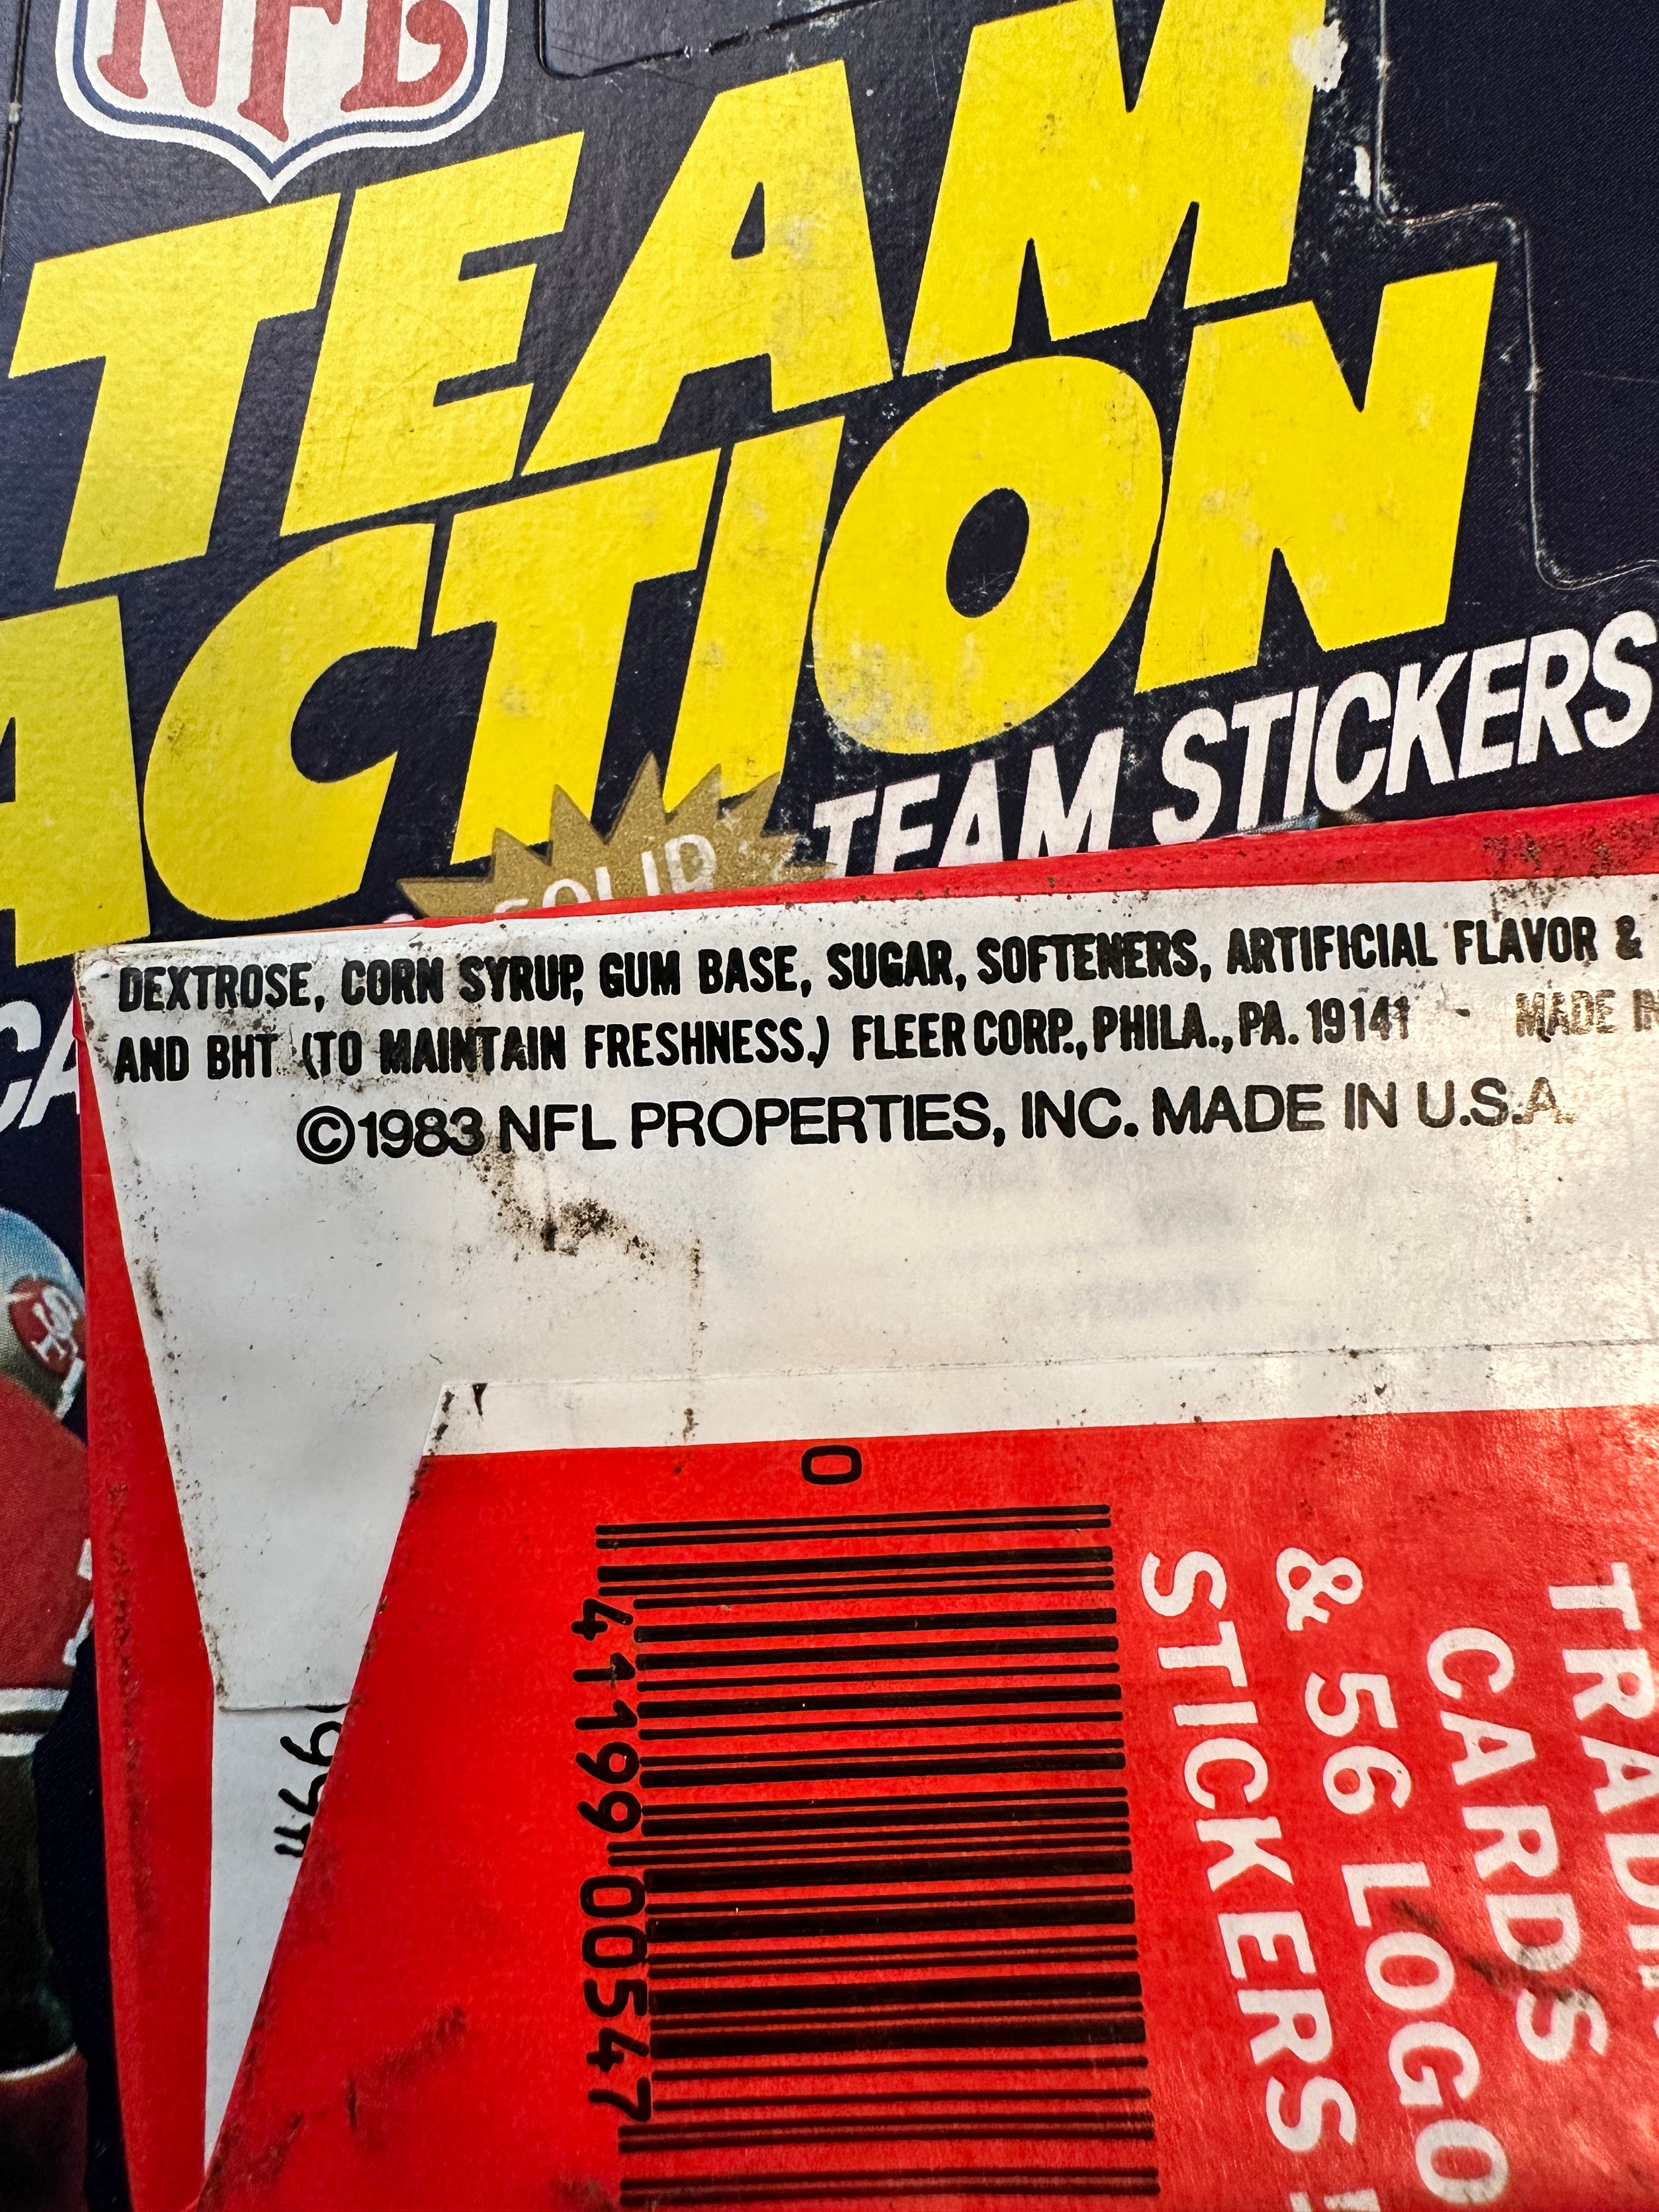 1983 Fleer Football Team Action photo cards 36 packs box